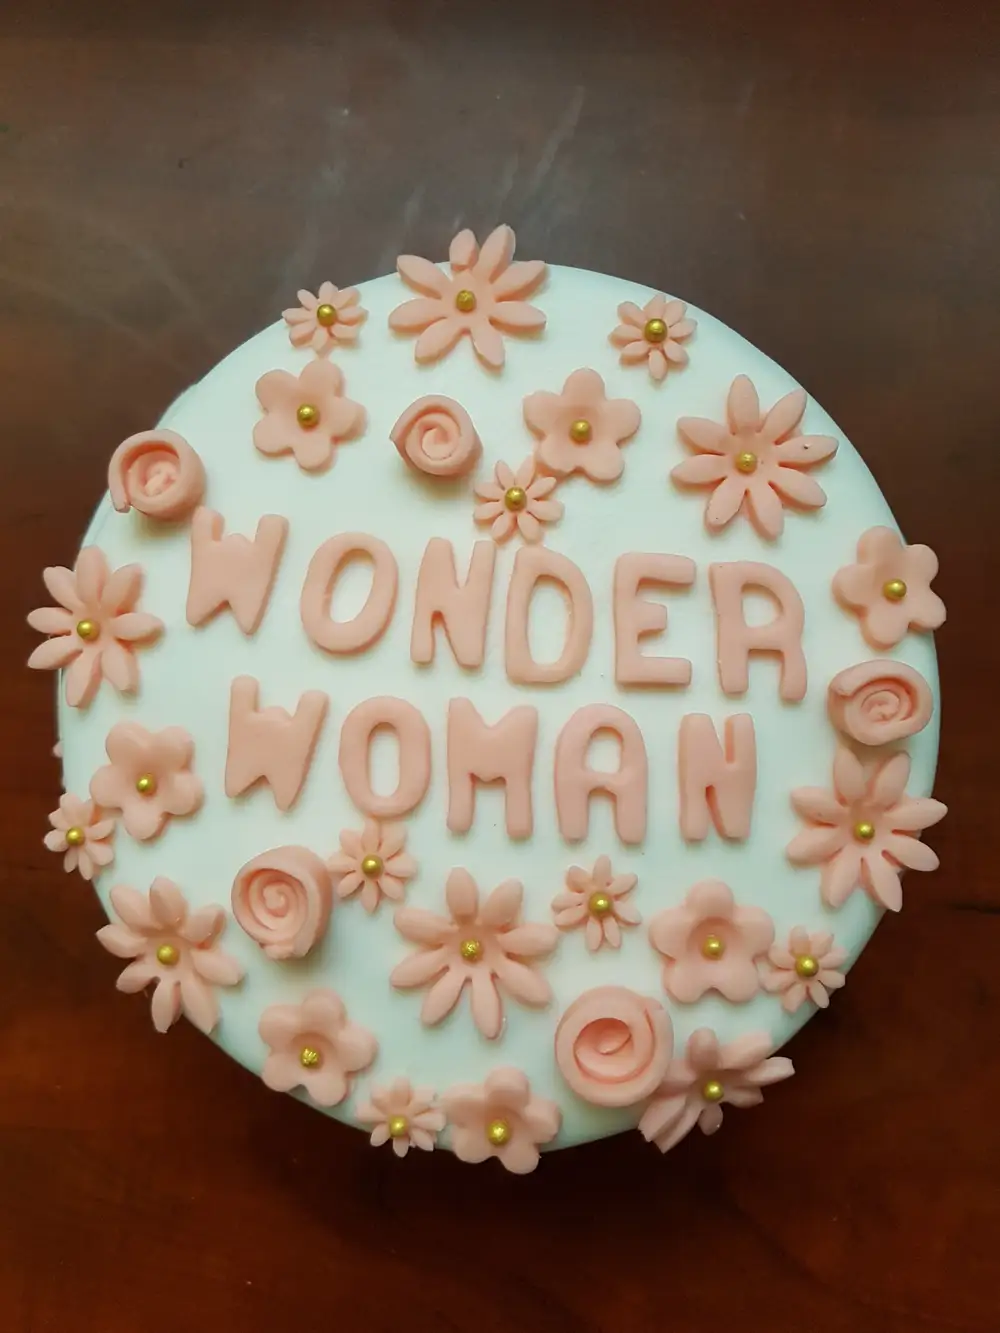 Birthday cake that says wonder woman